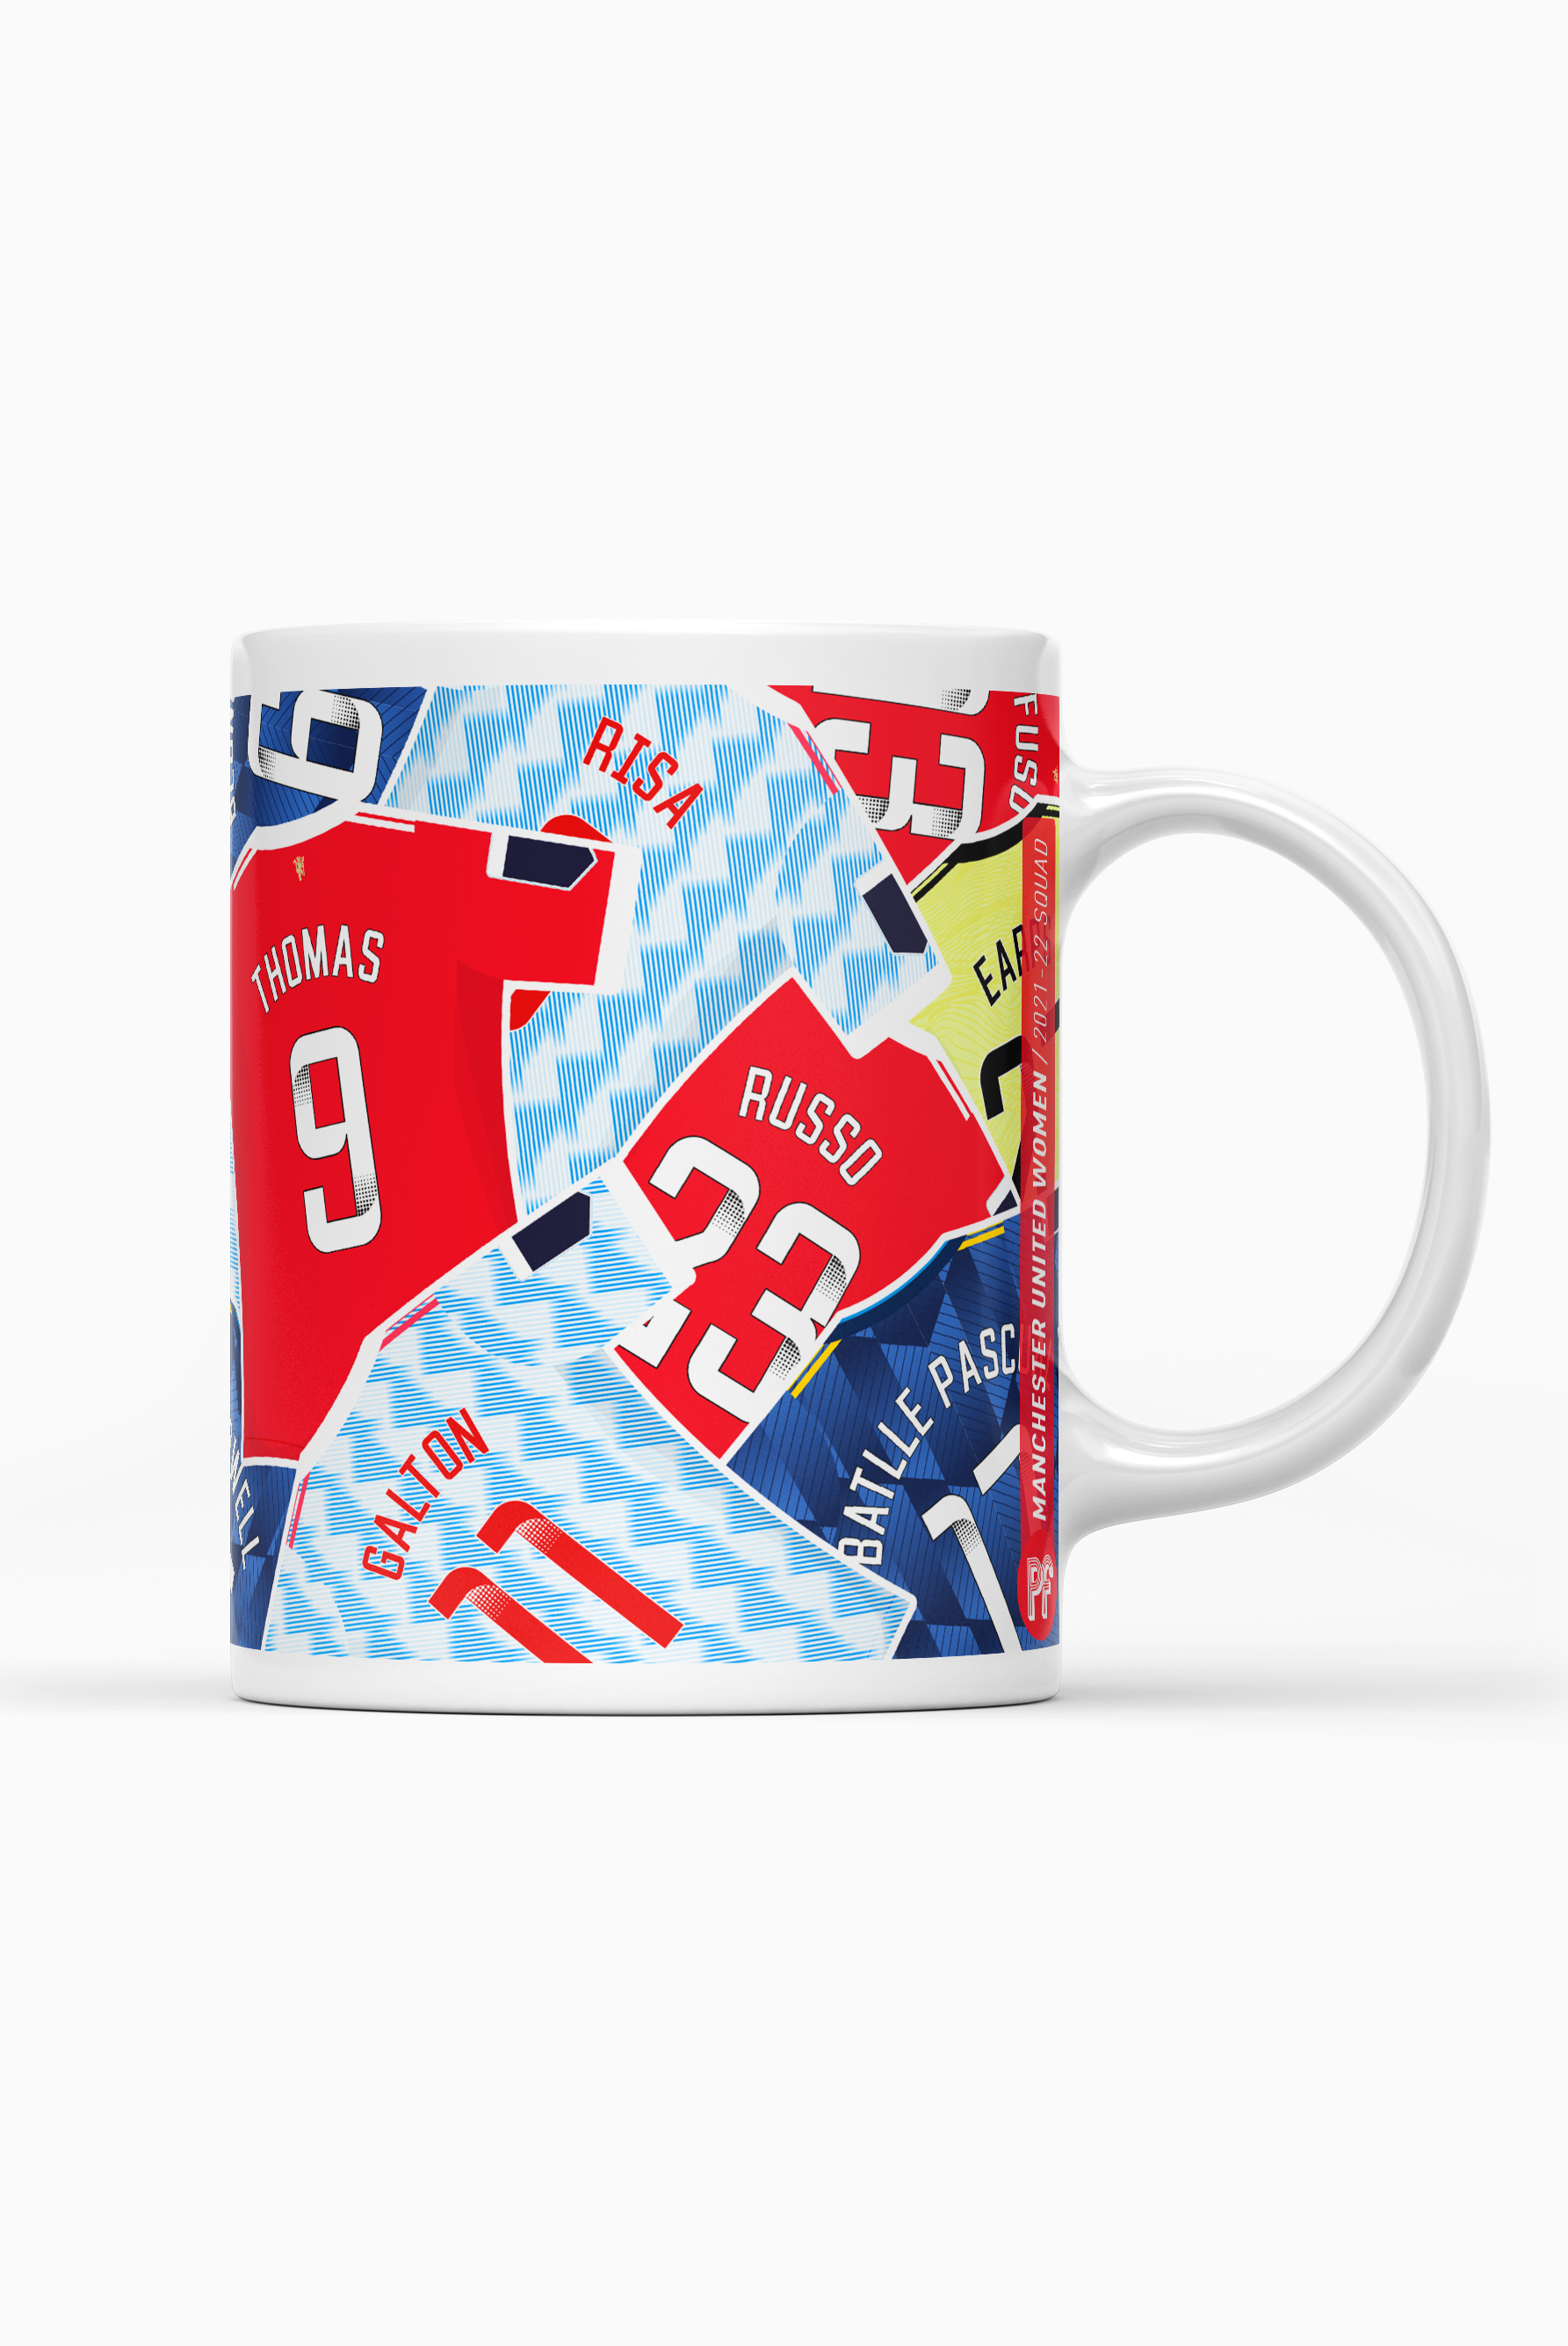 Man United Women / 2021-22 Squad Mug